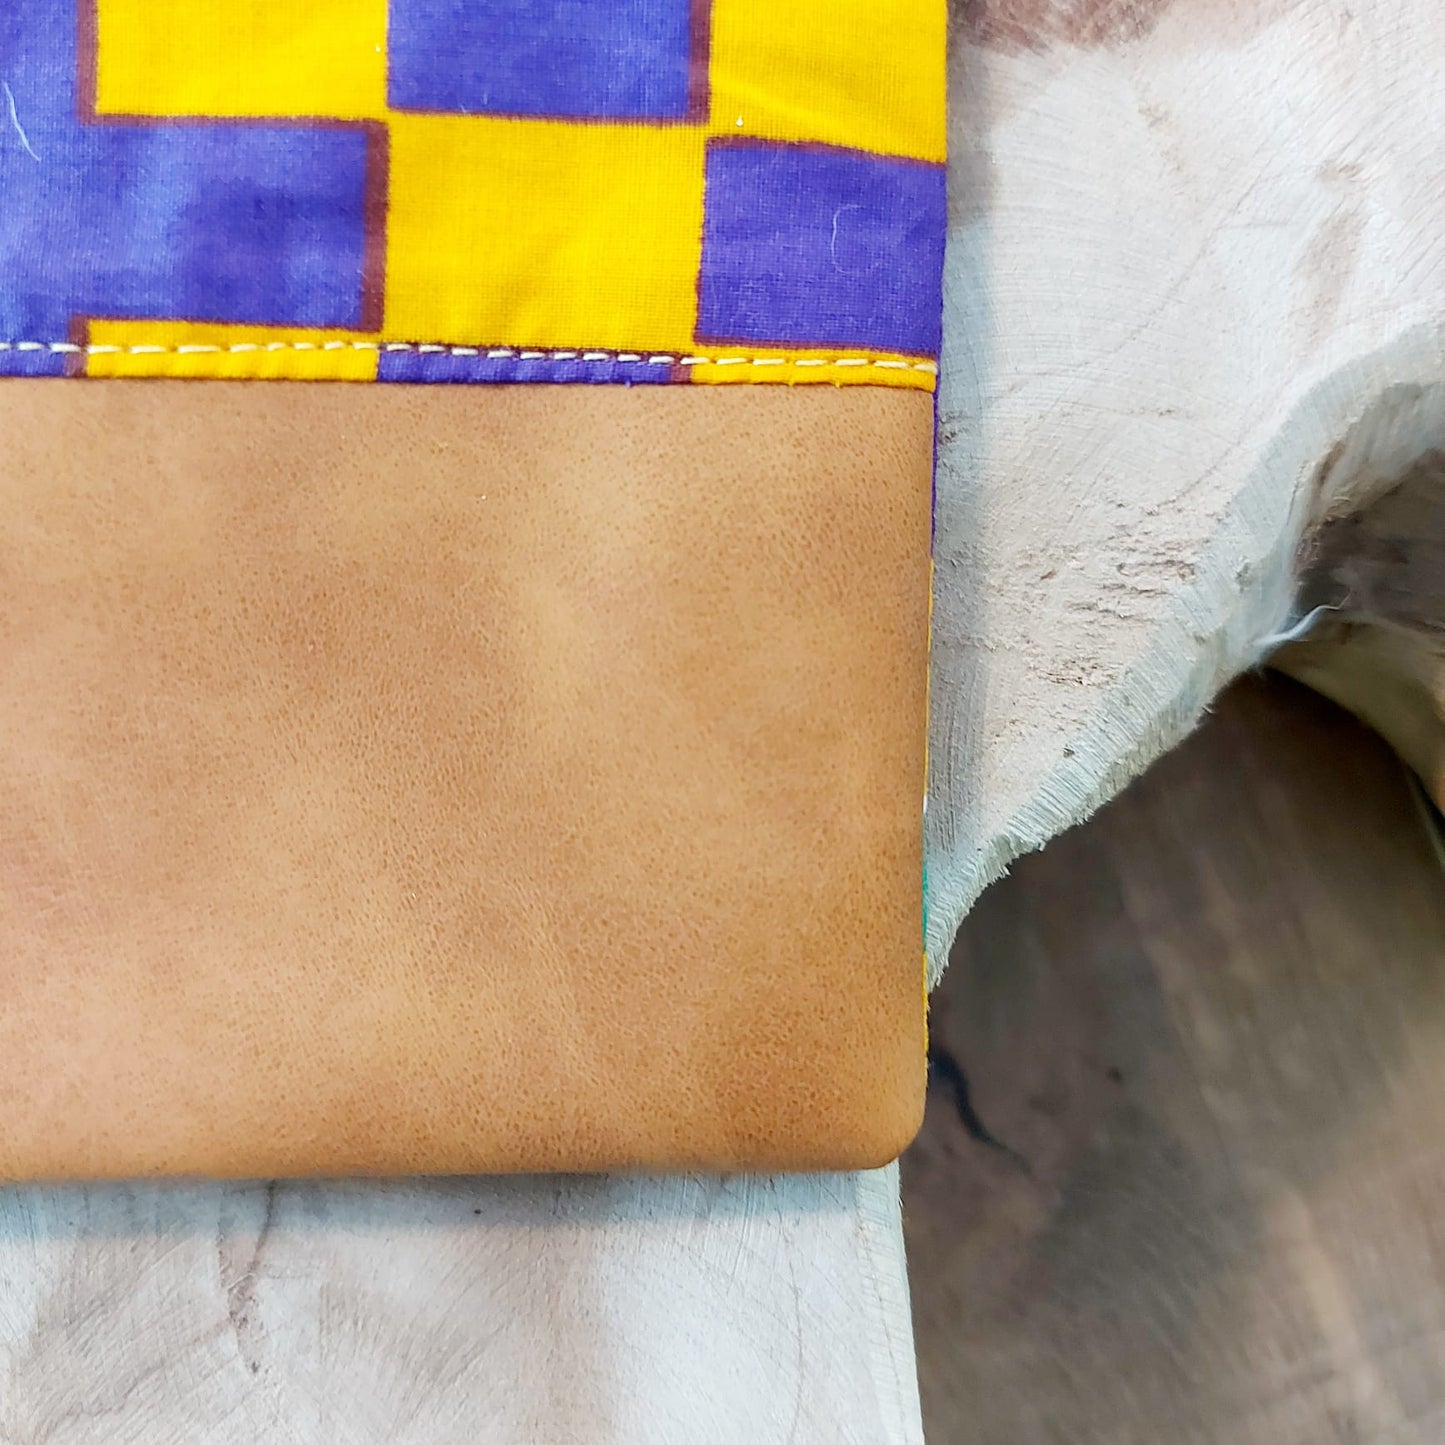 African Print Zipper Pouch | Make-up Bag | Pencil Case | Vegan Leather Detail